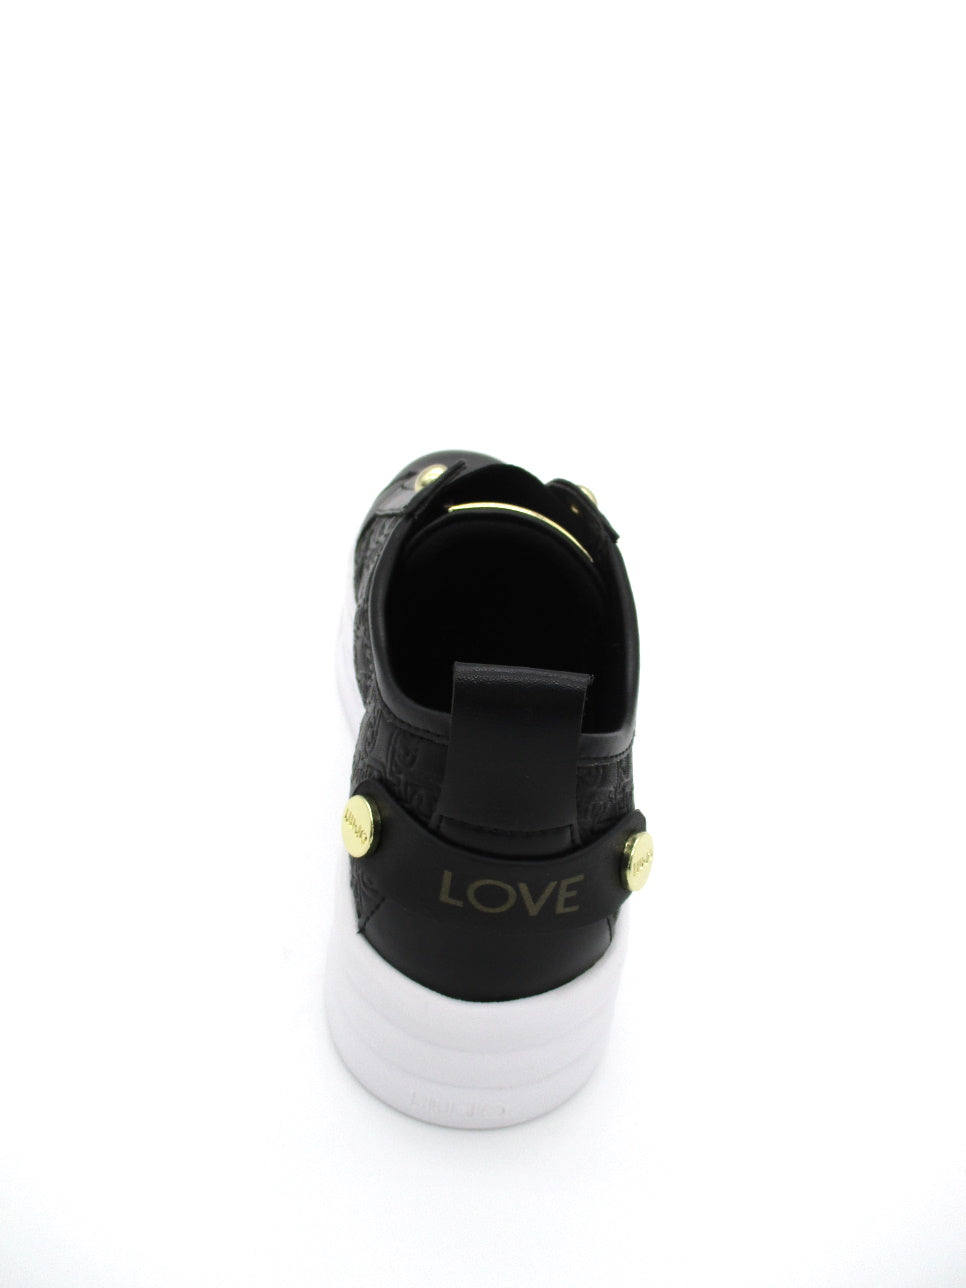 Sneaker LIU JO Cleo 02 Black